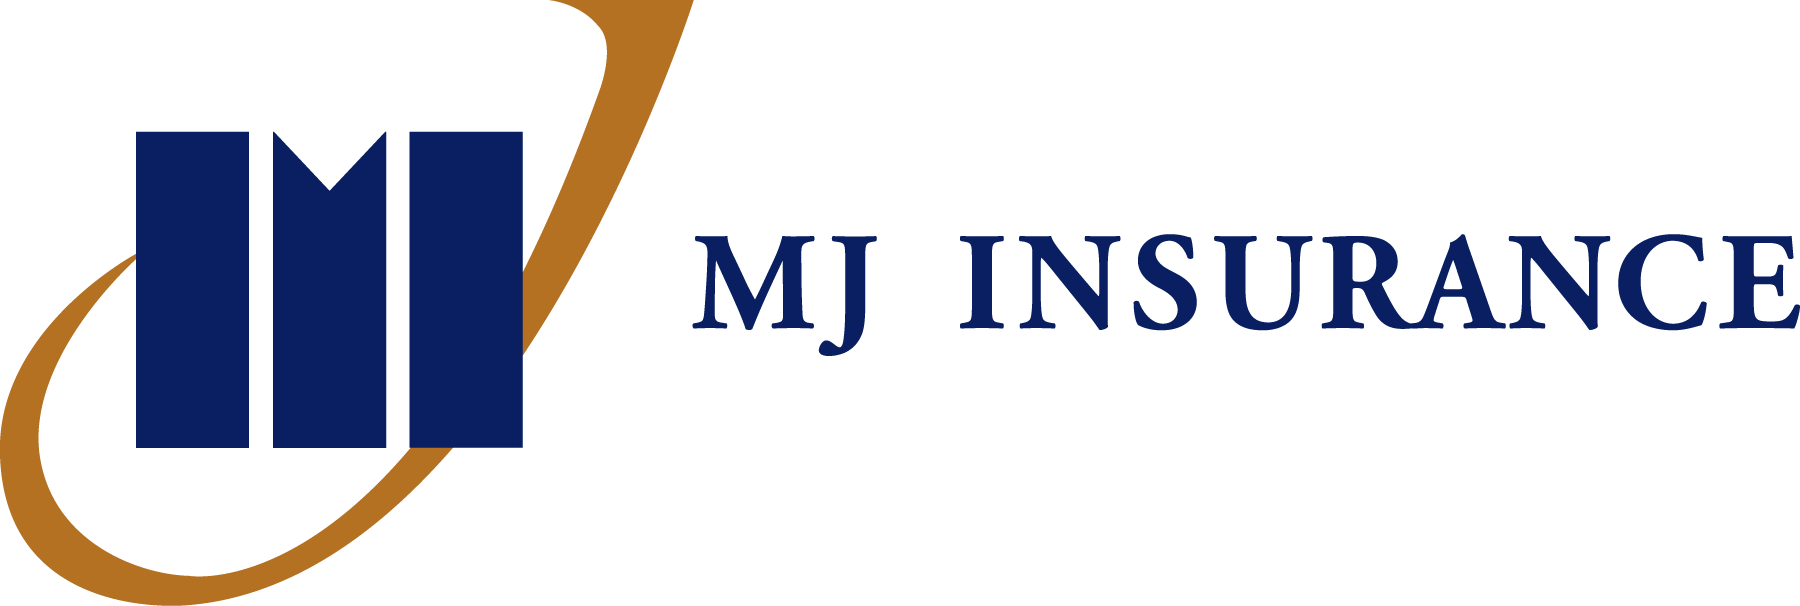 MJ Insurance blue and gold swoosh logo.